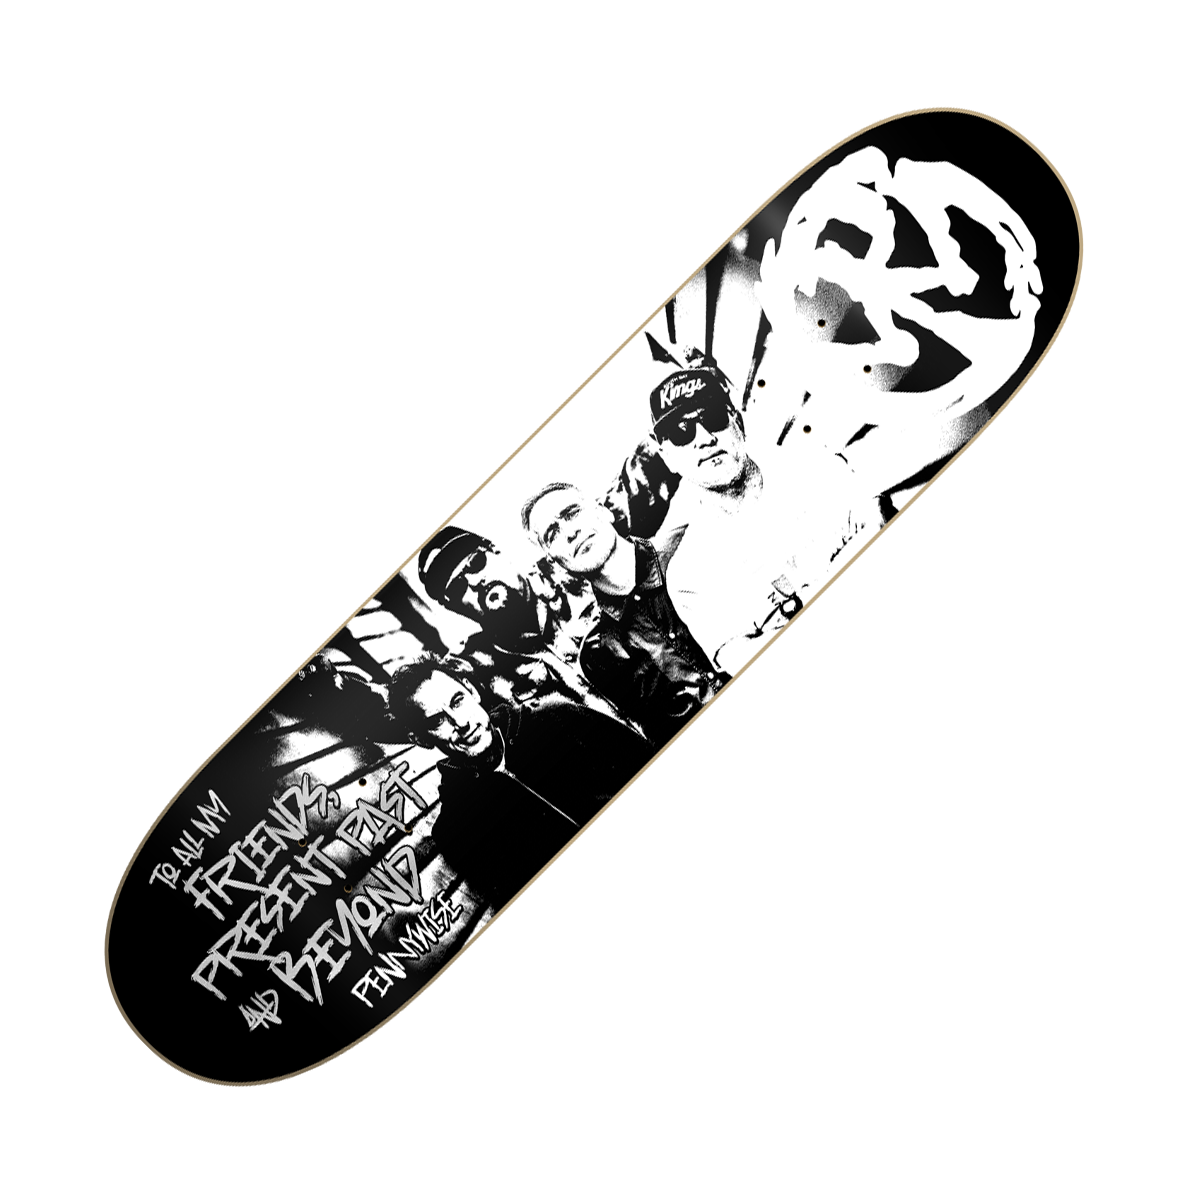 PENNYWISE - "Bro Hymn" (Skateboard Deck)